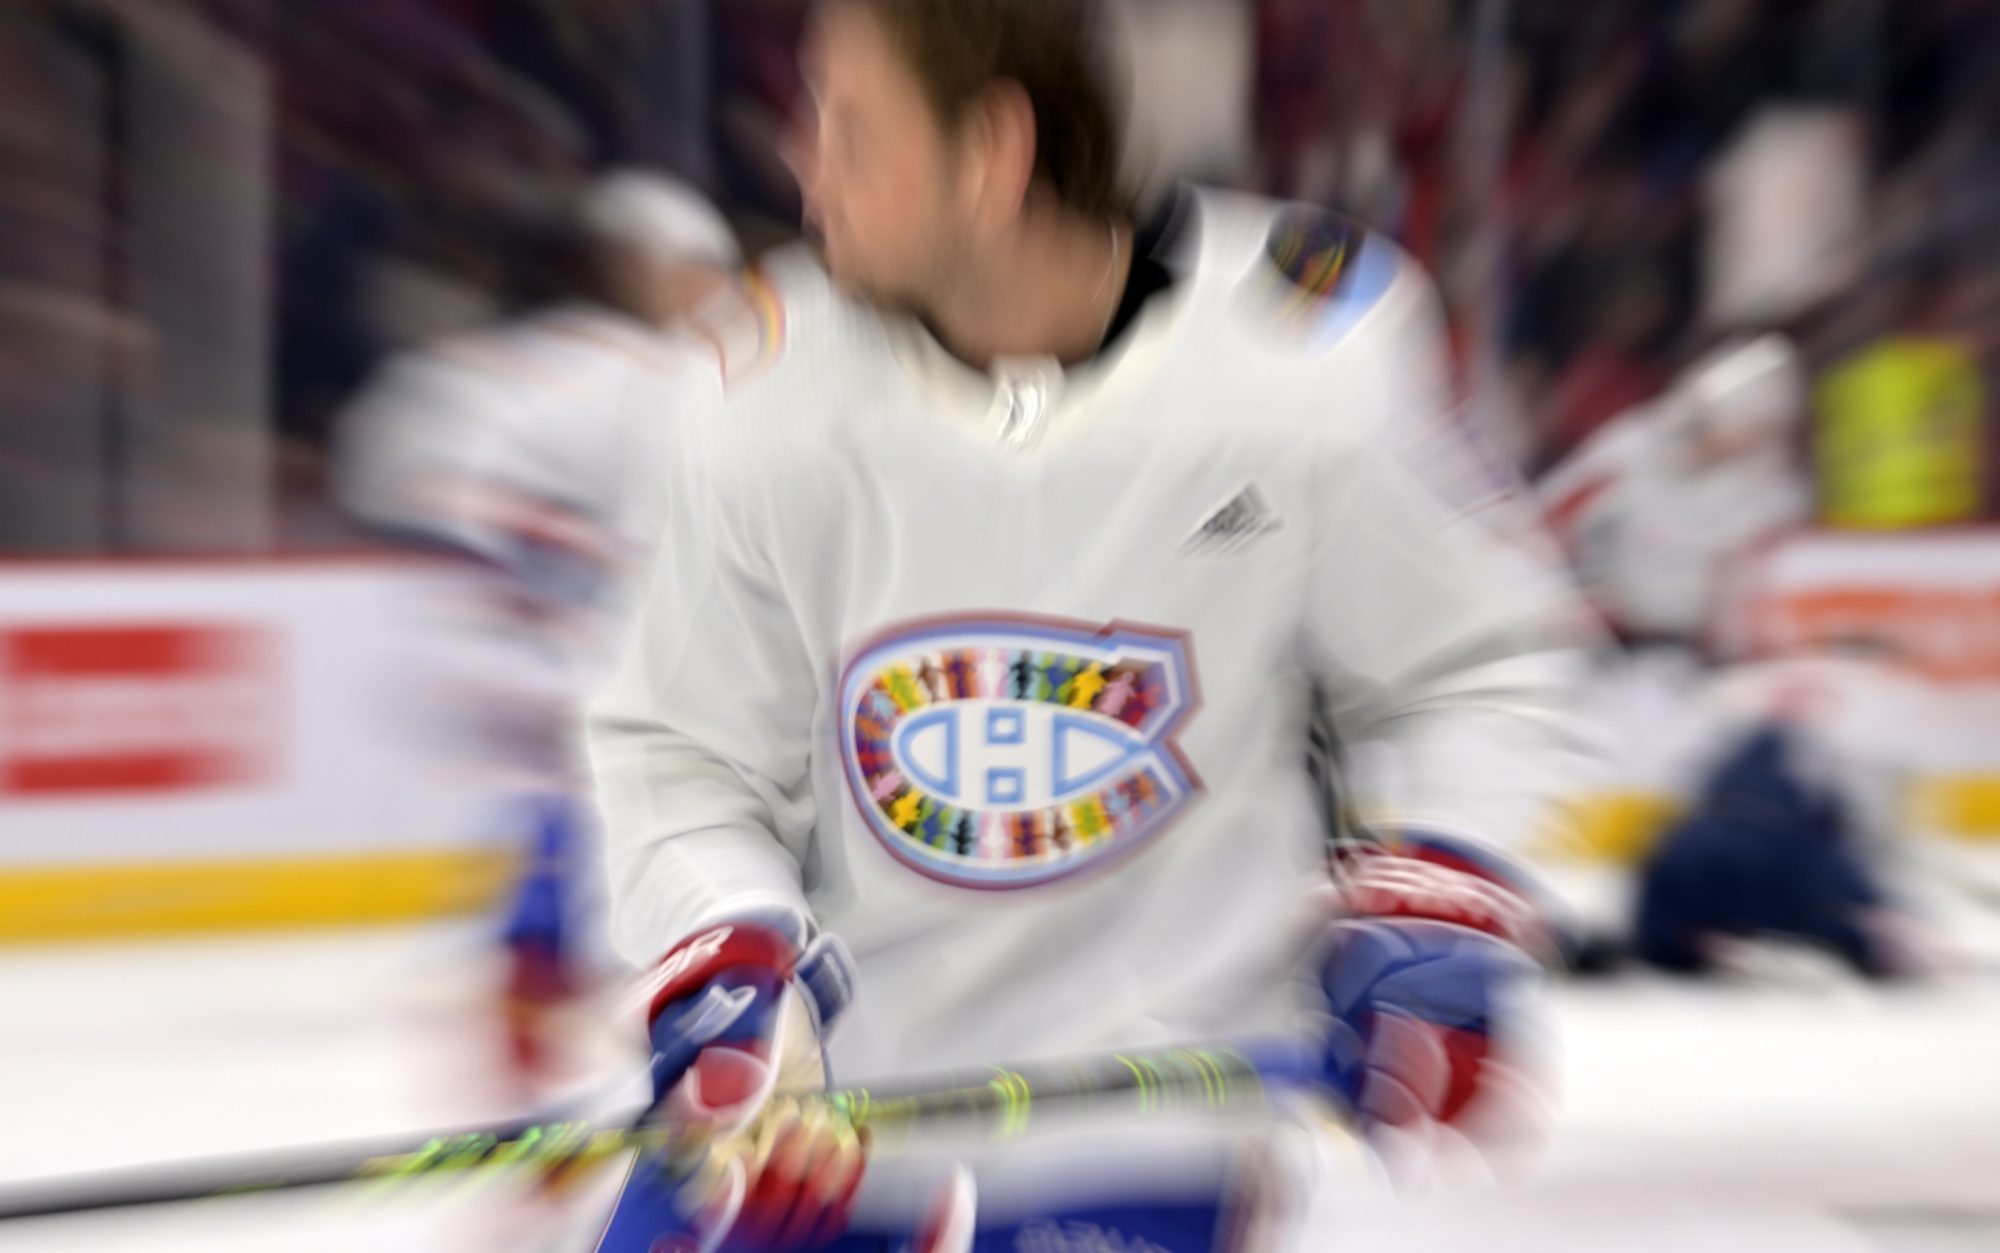 NHL stars criticize league's decision on Pride jerseys